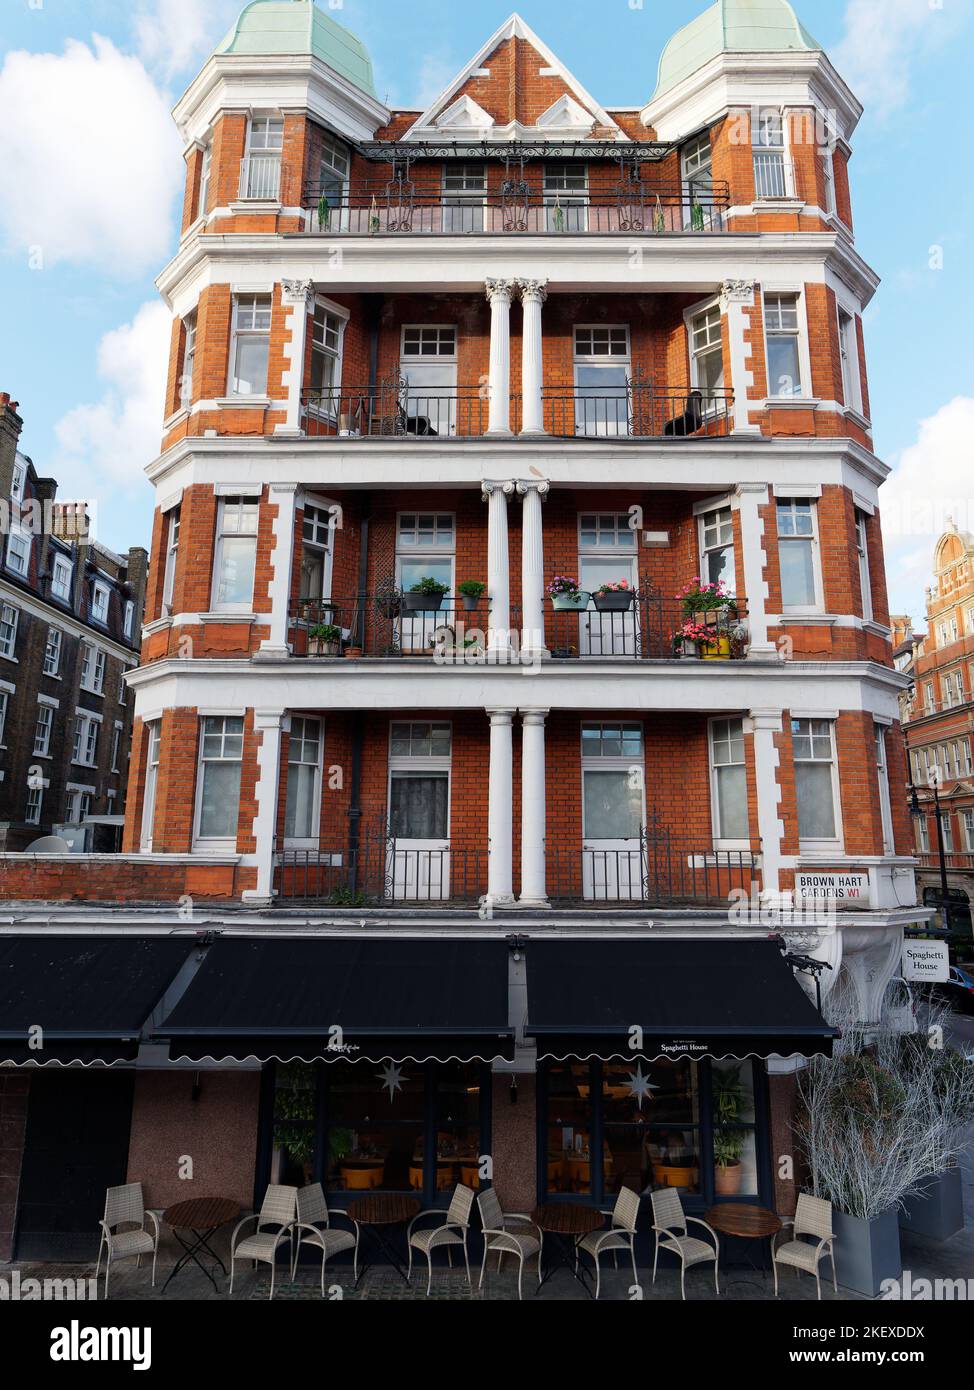 Beautiful apartments with balconies overlooking Brown Hart Gardens, with restaurant below, near Duke Street, Mayfair, London Stock Photo